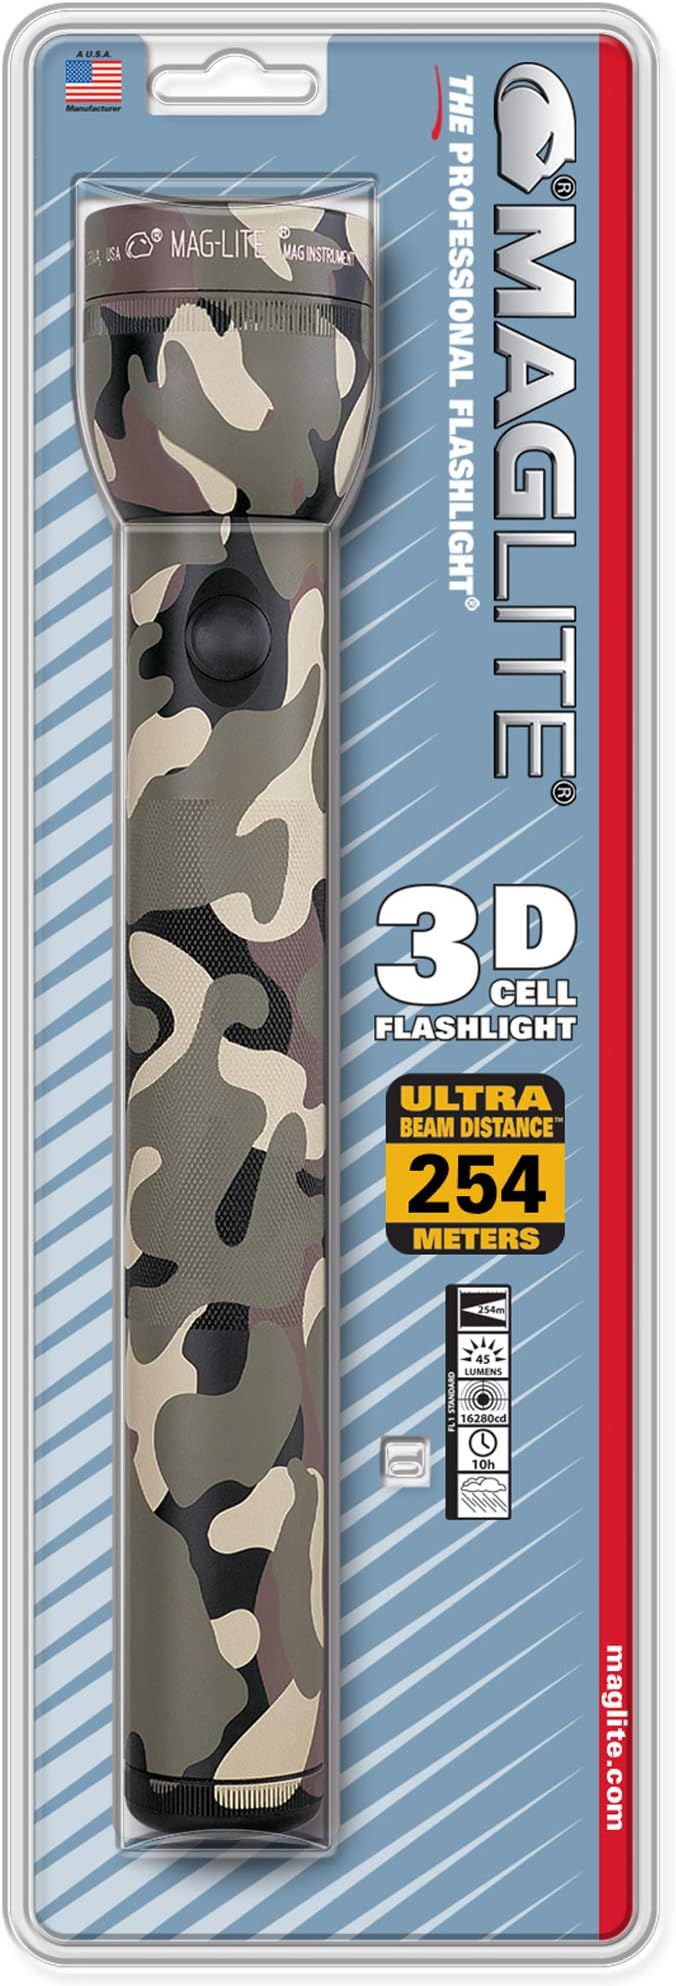 Mag Lite Maglite 3 Cell D  Flashlight Camo-Blister Pack